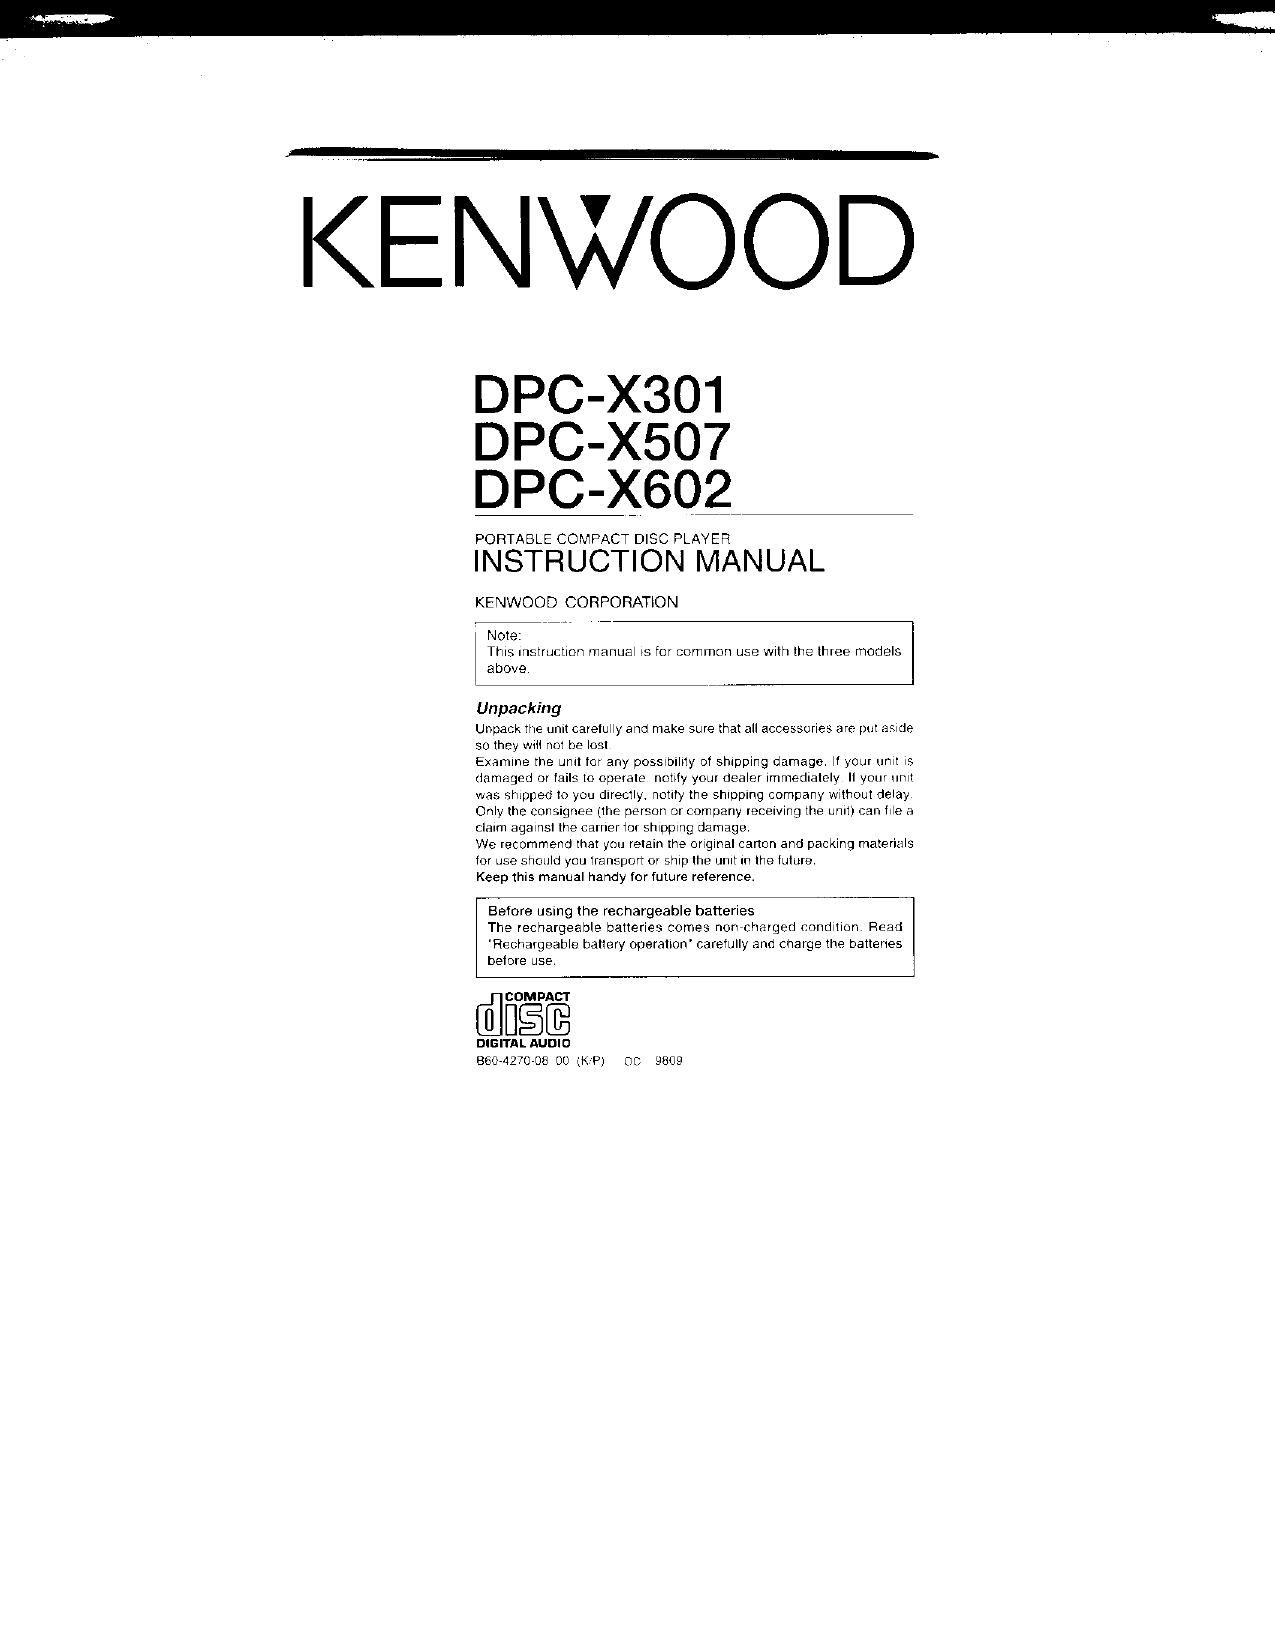 Kenwood DPCX 507 Owners Manual